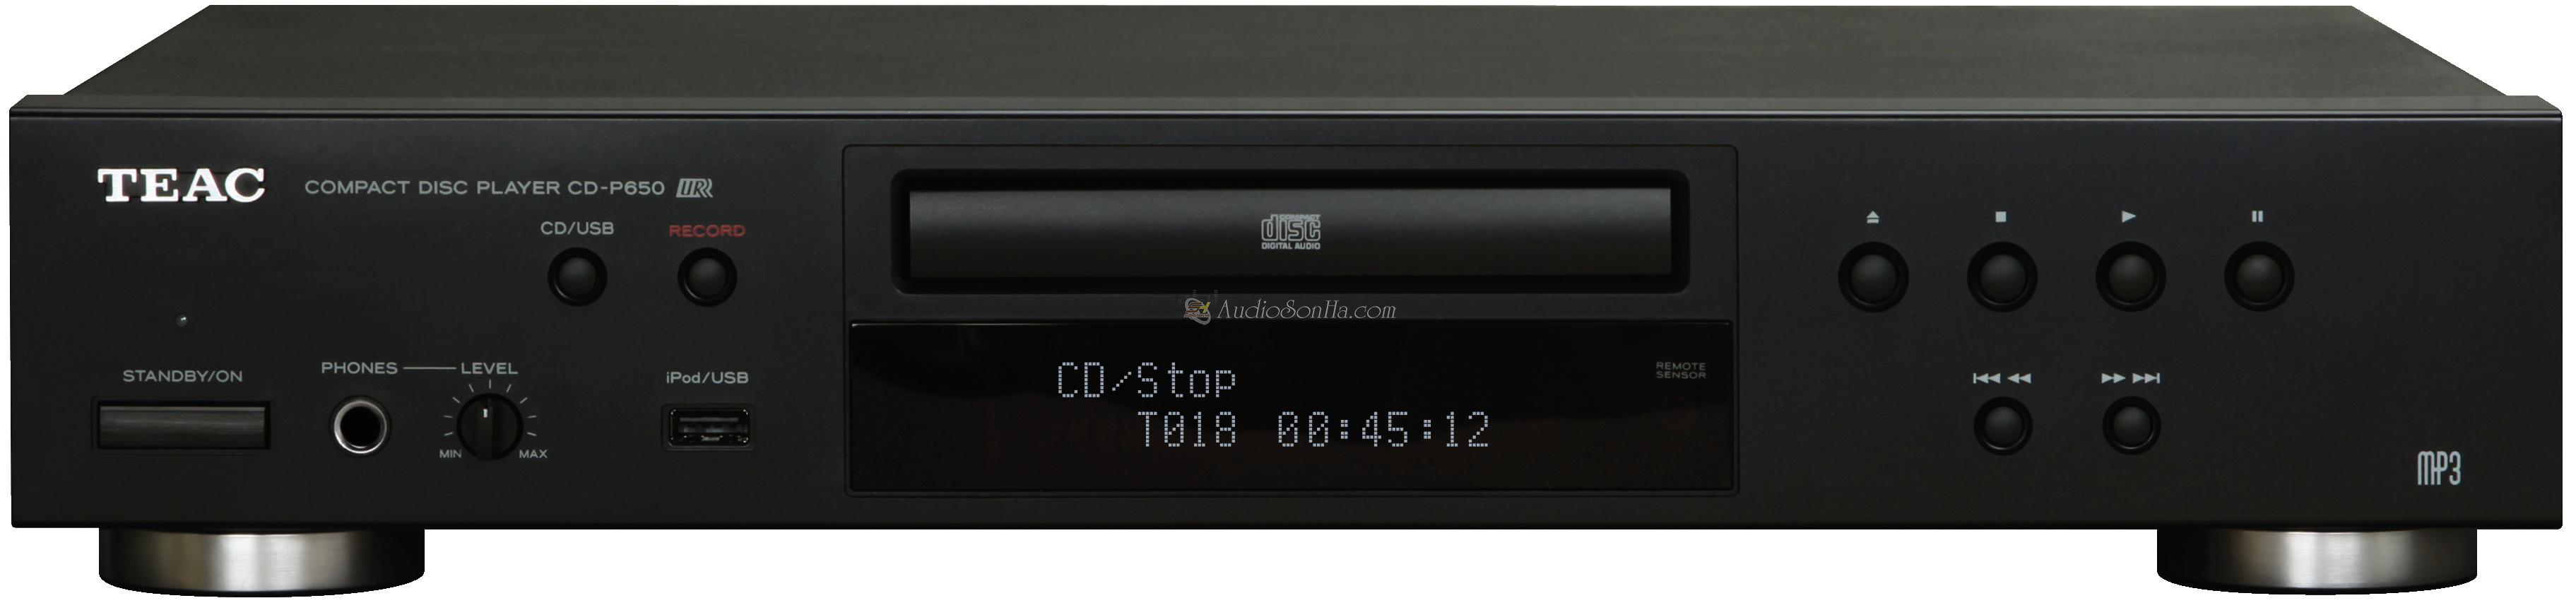 Đầu CD TEAC CD-P650